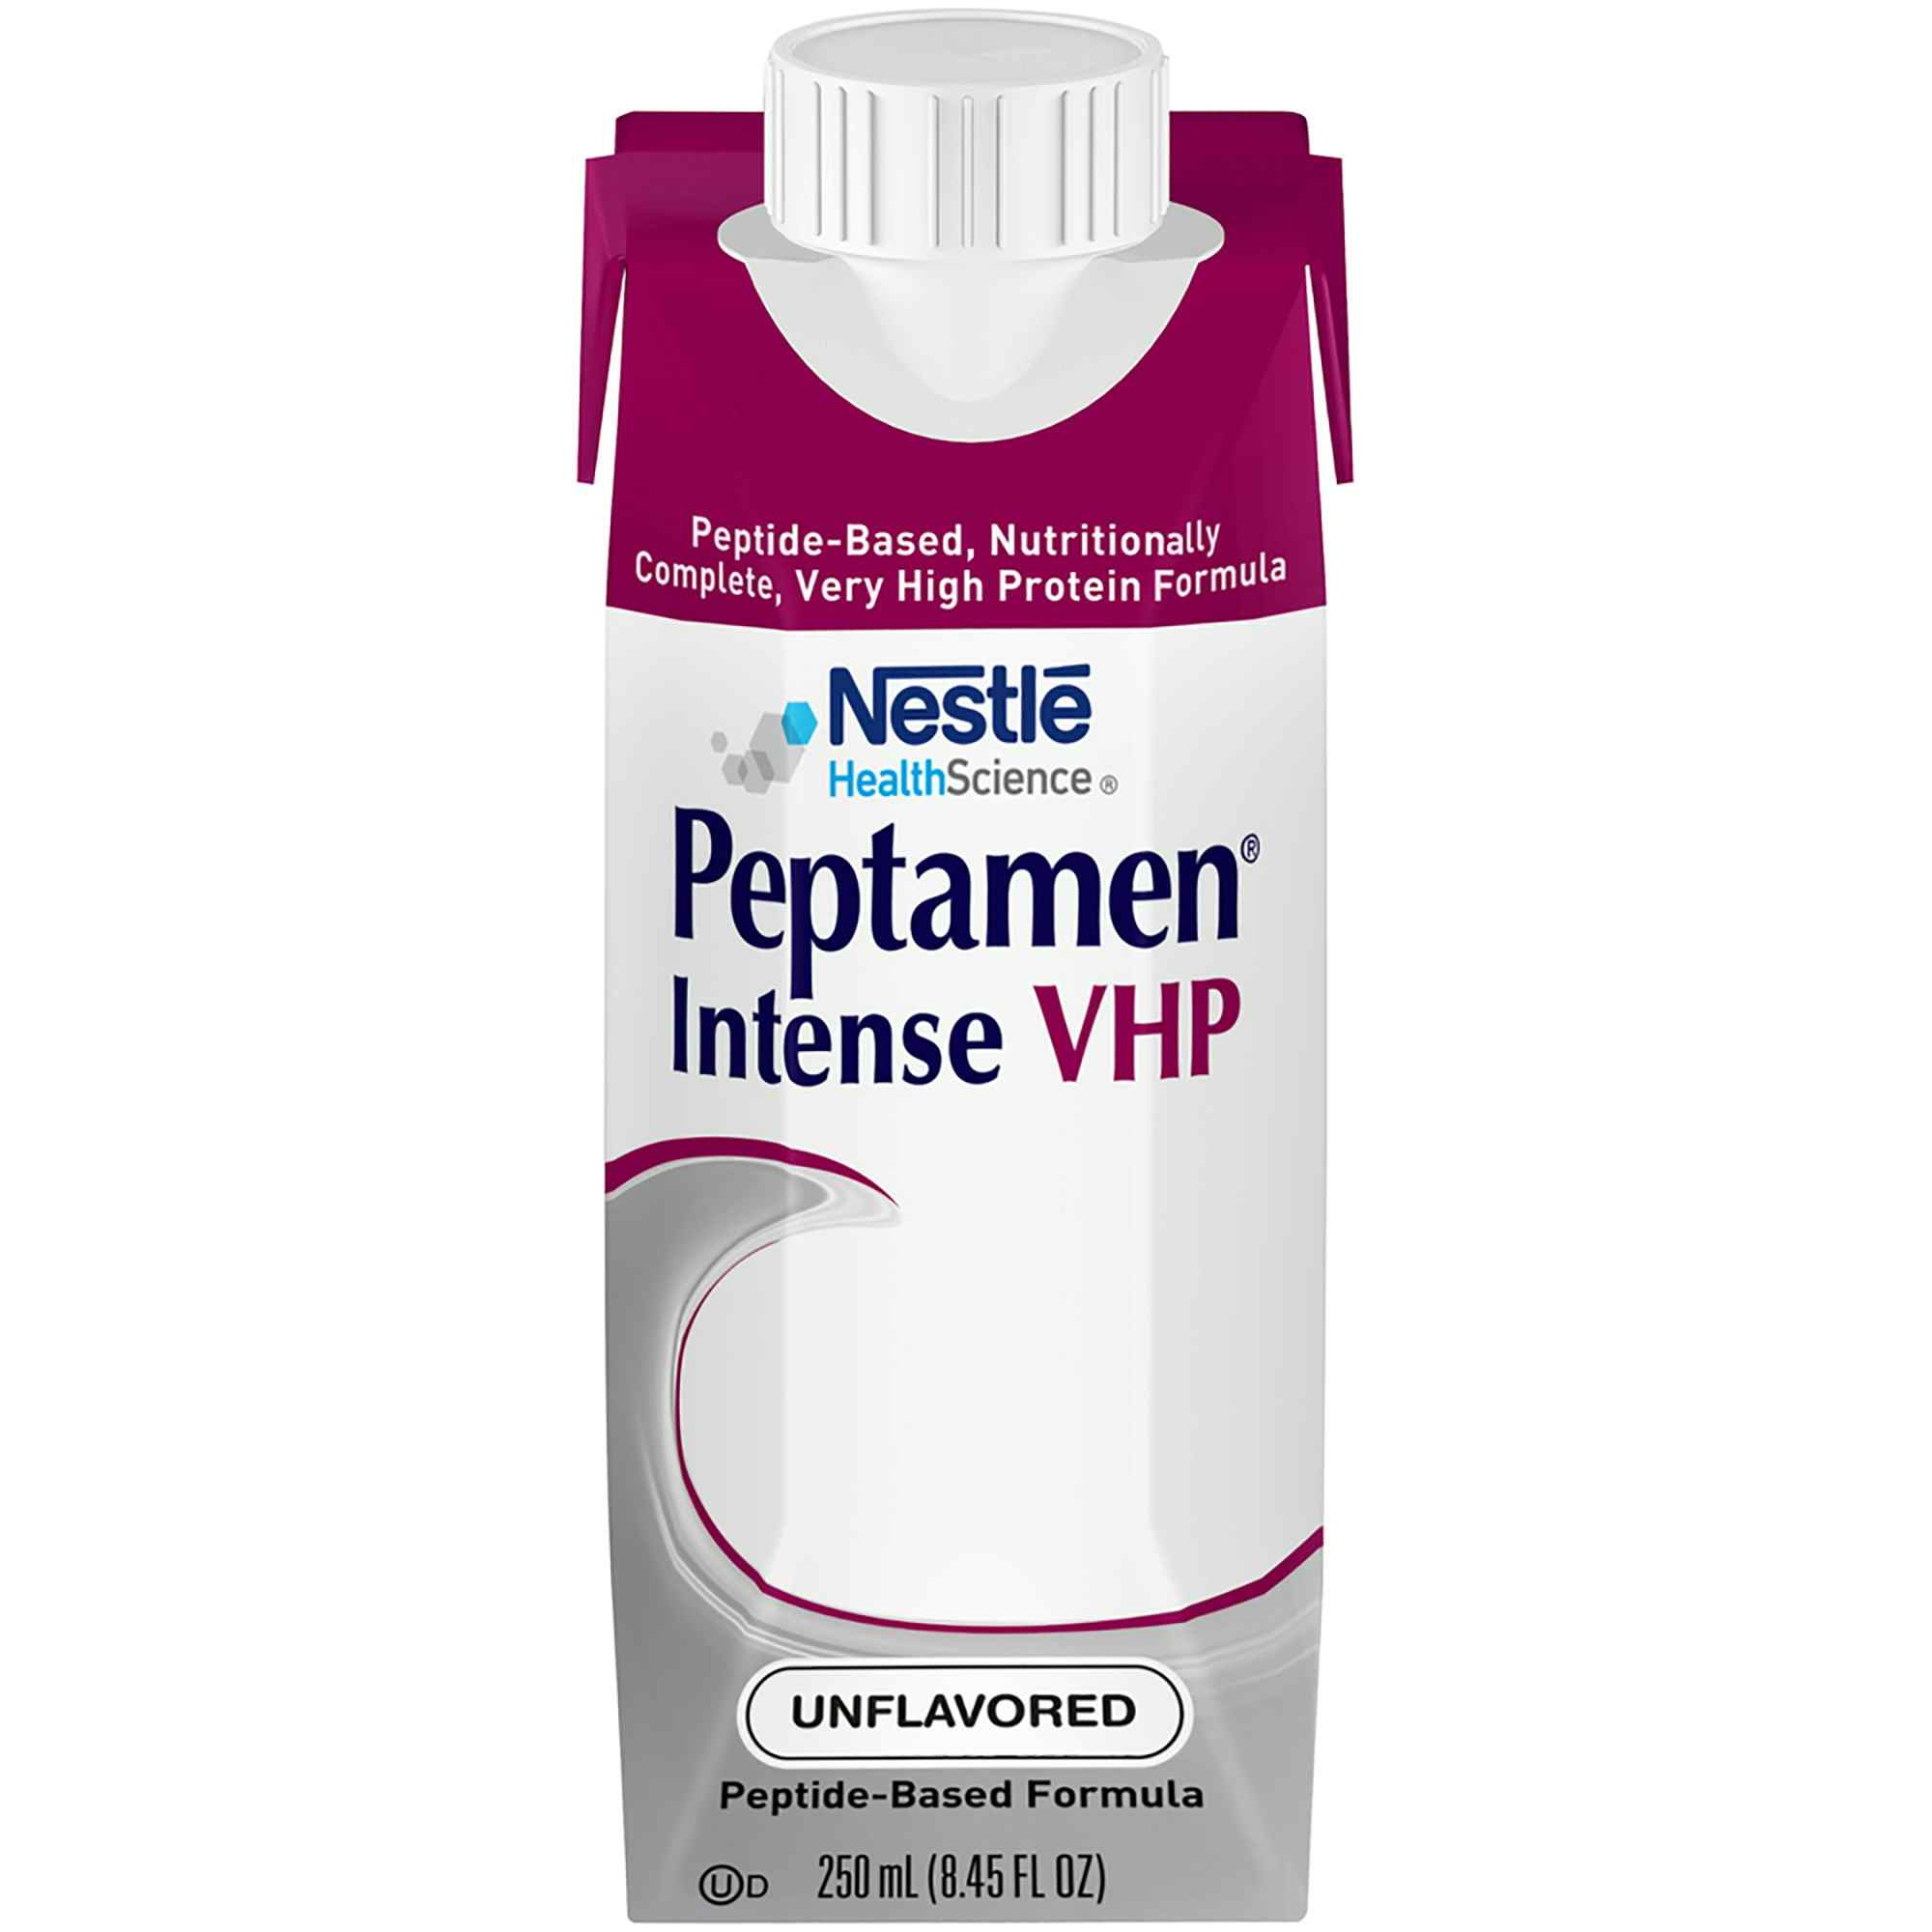 Nestle HealthScience Peptamen Intense VHP Peptide-Based Very High Protein Complete Nutrition Tube Feeding Formula, 8.45 oz., 00043900432717, 1 Each